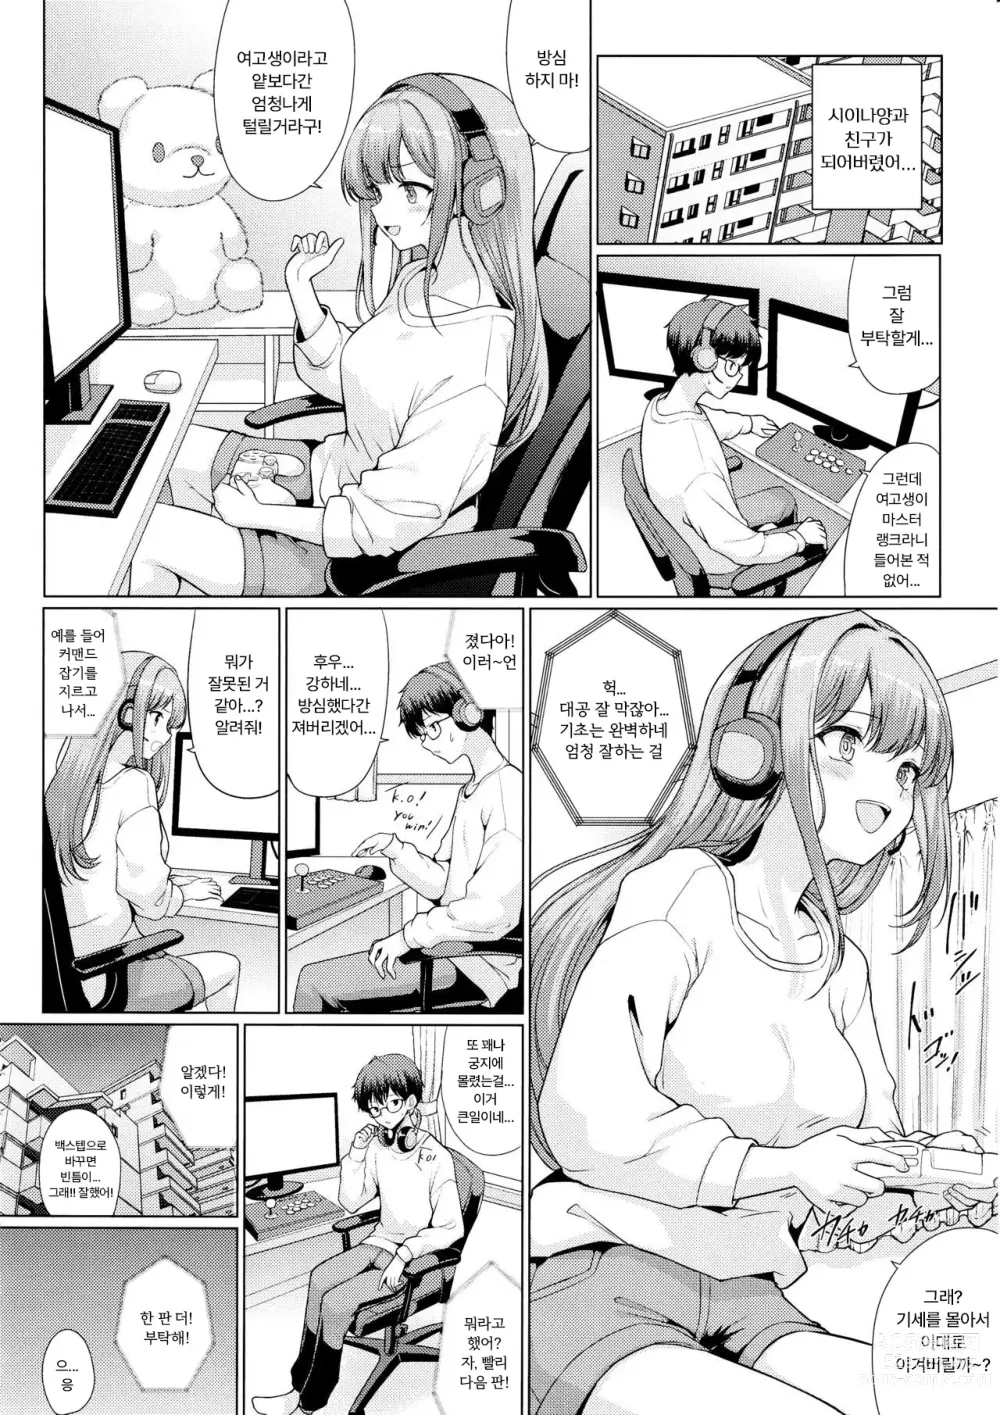 Page 5 of doujinshi 오타쿠에게 상냥한 갸루는 네토라레 당한다